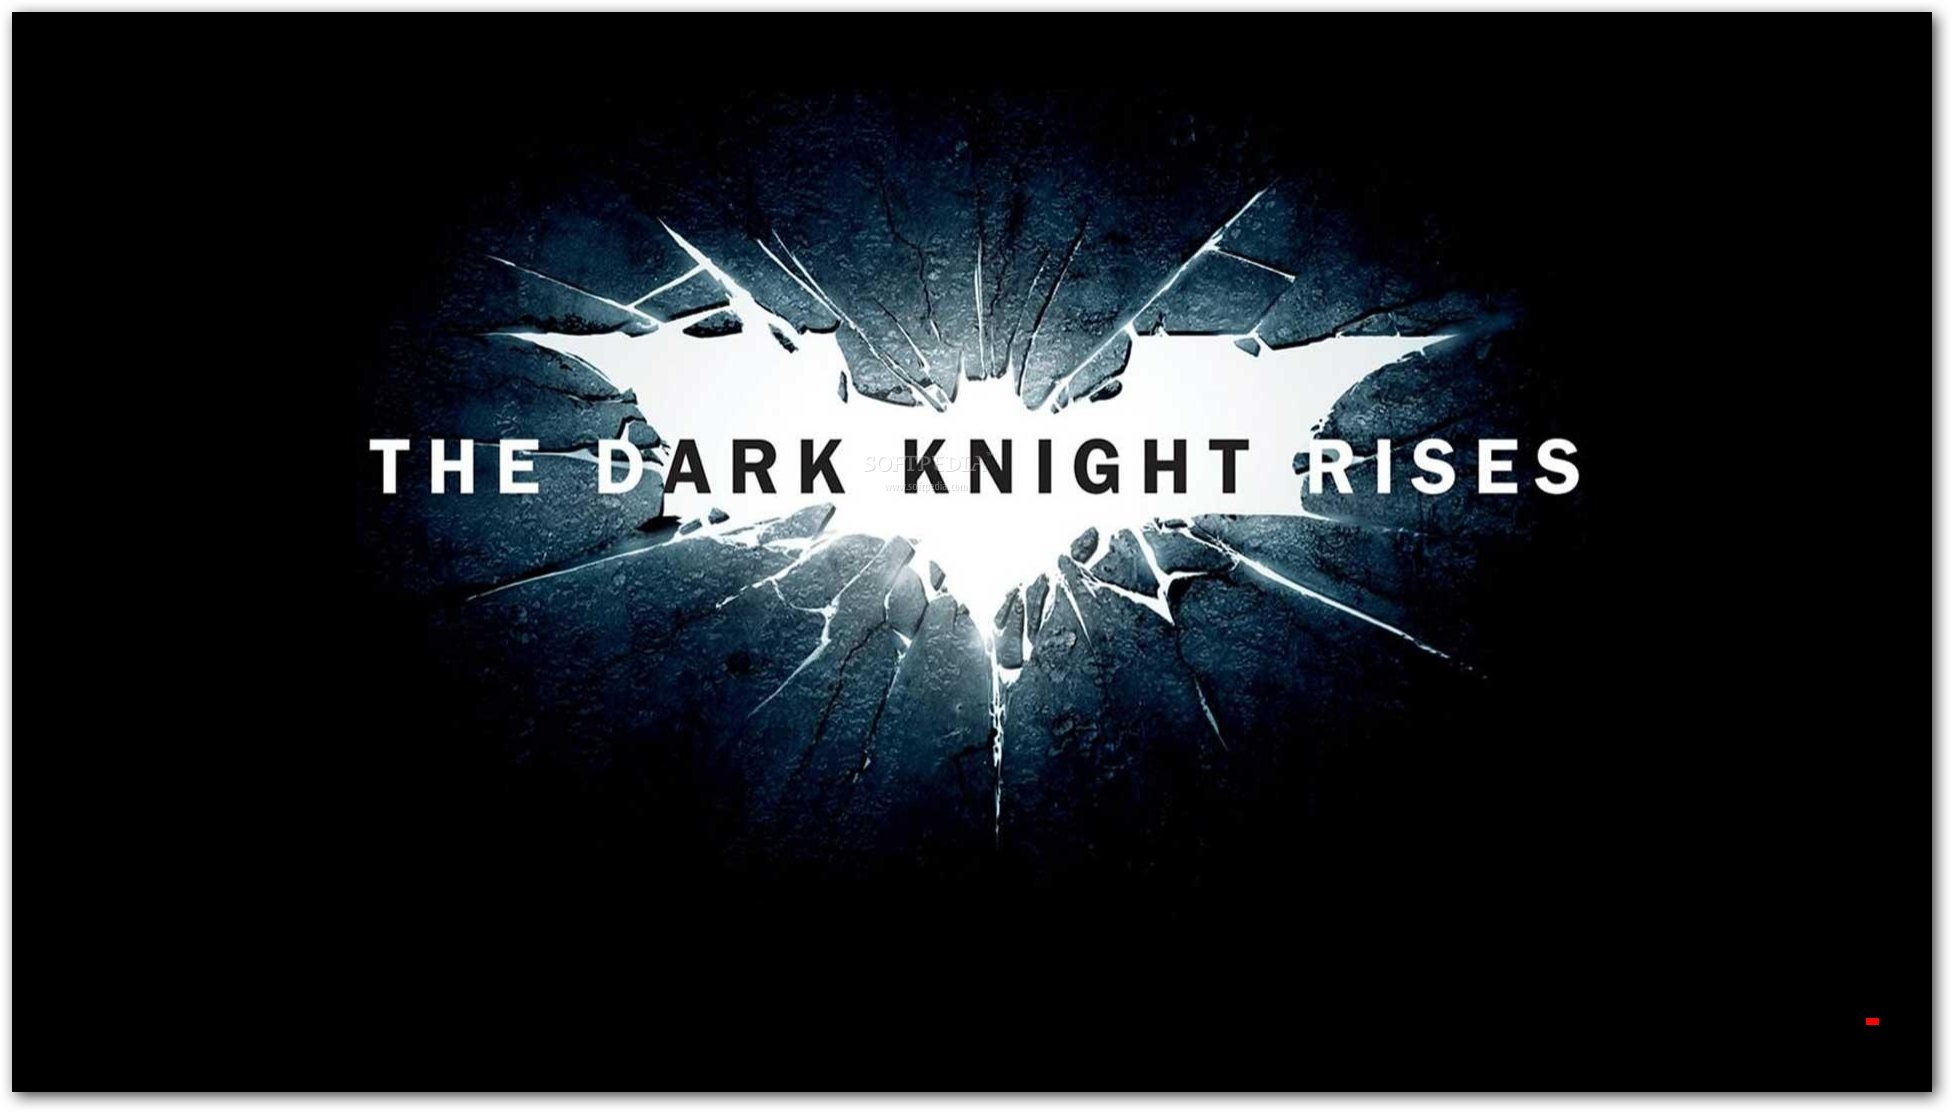 instal the last version for windows The Dark Knight Rises